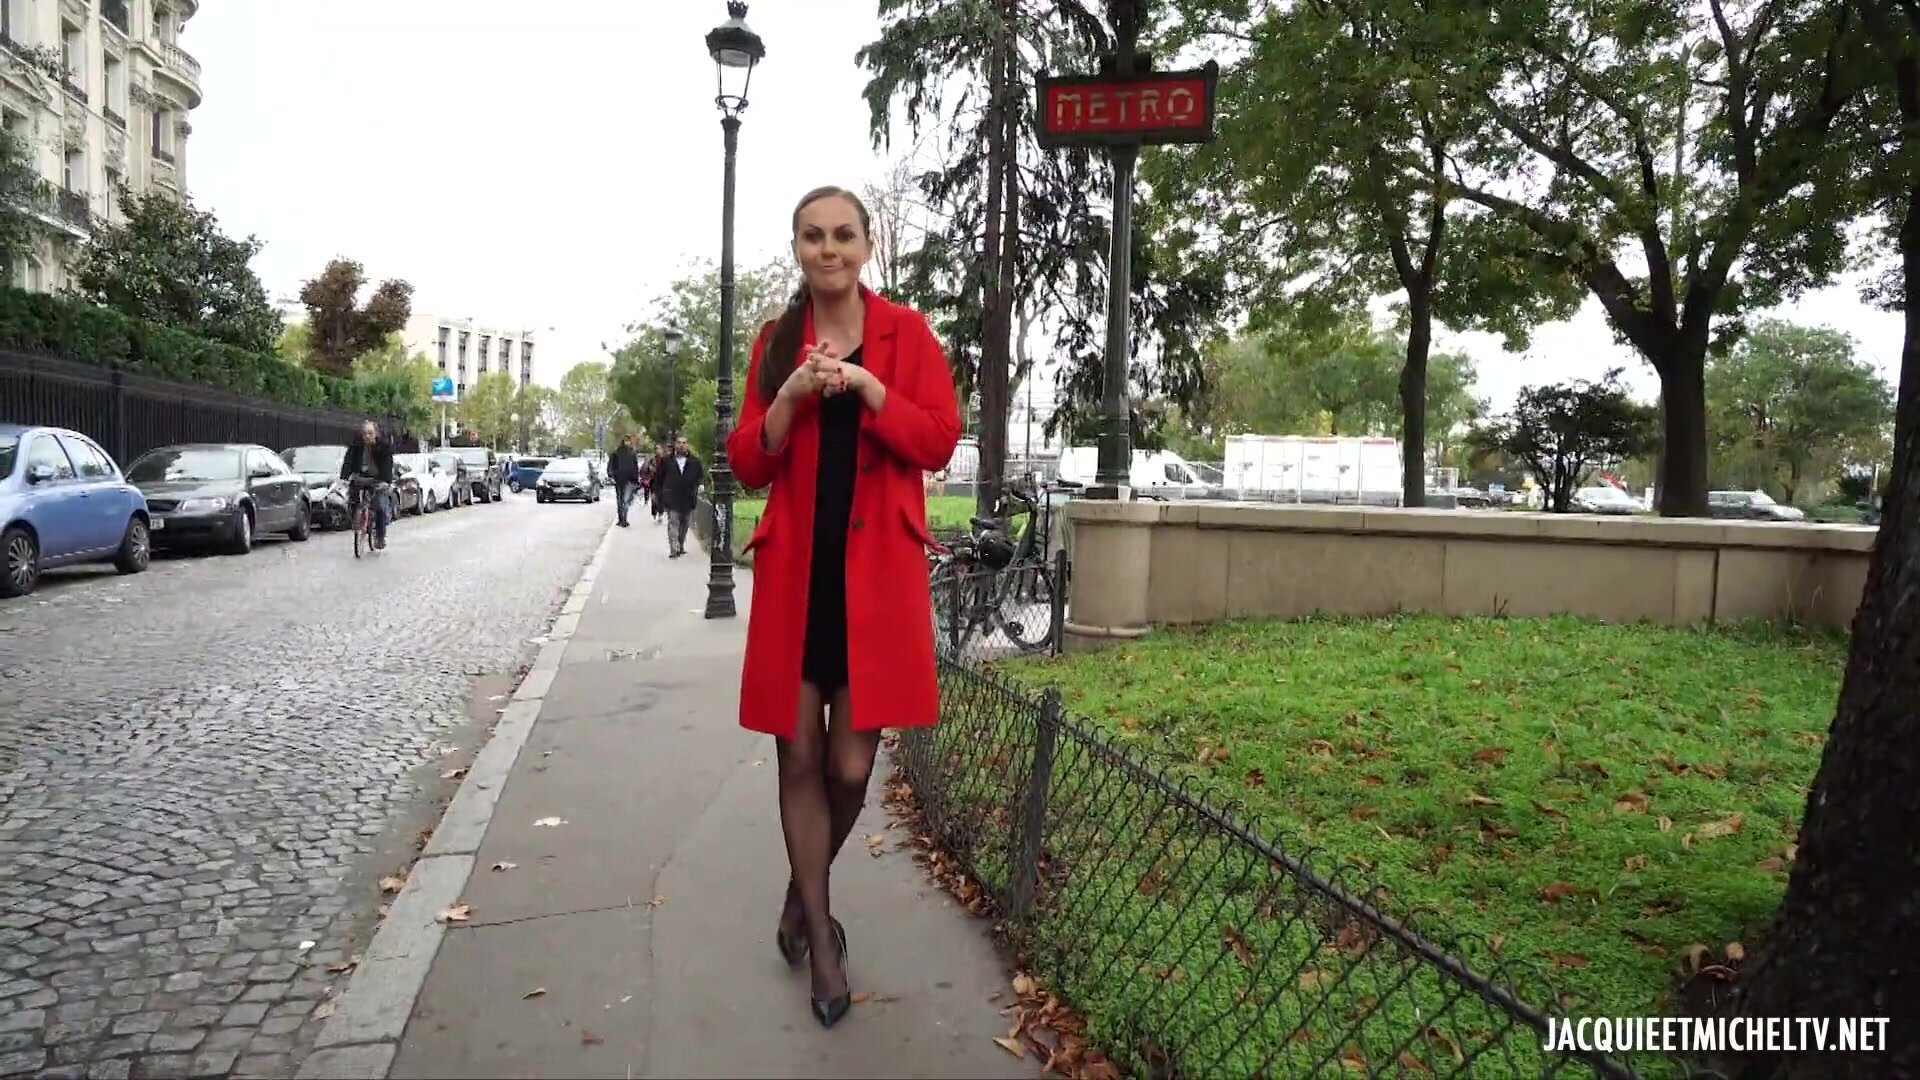 A sensual Parisian stroll for the beautiful Tina!